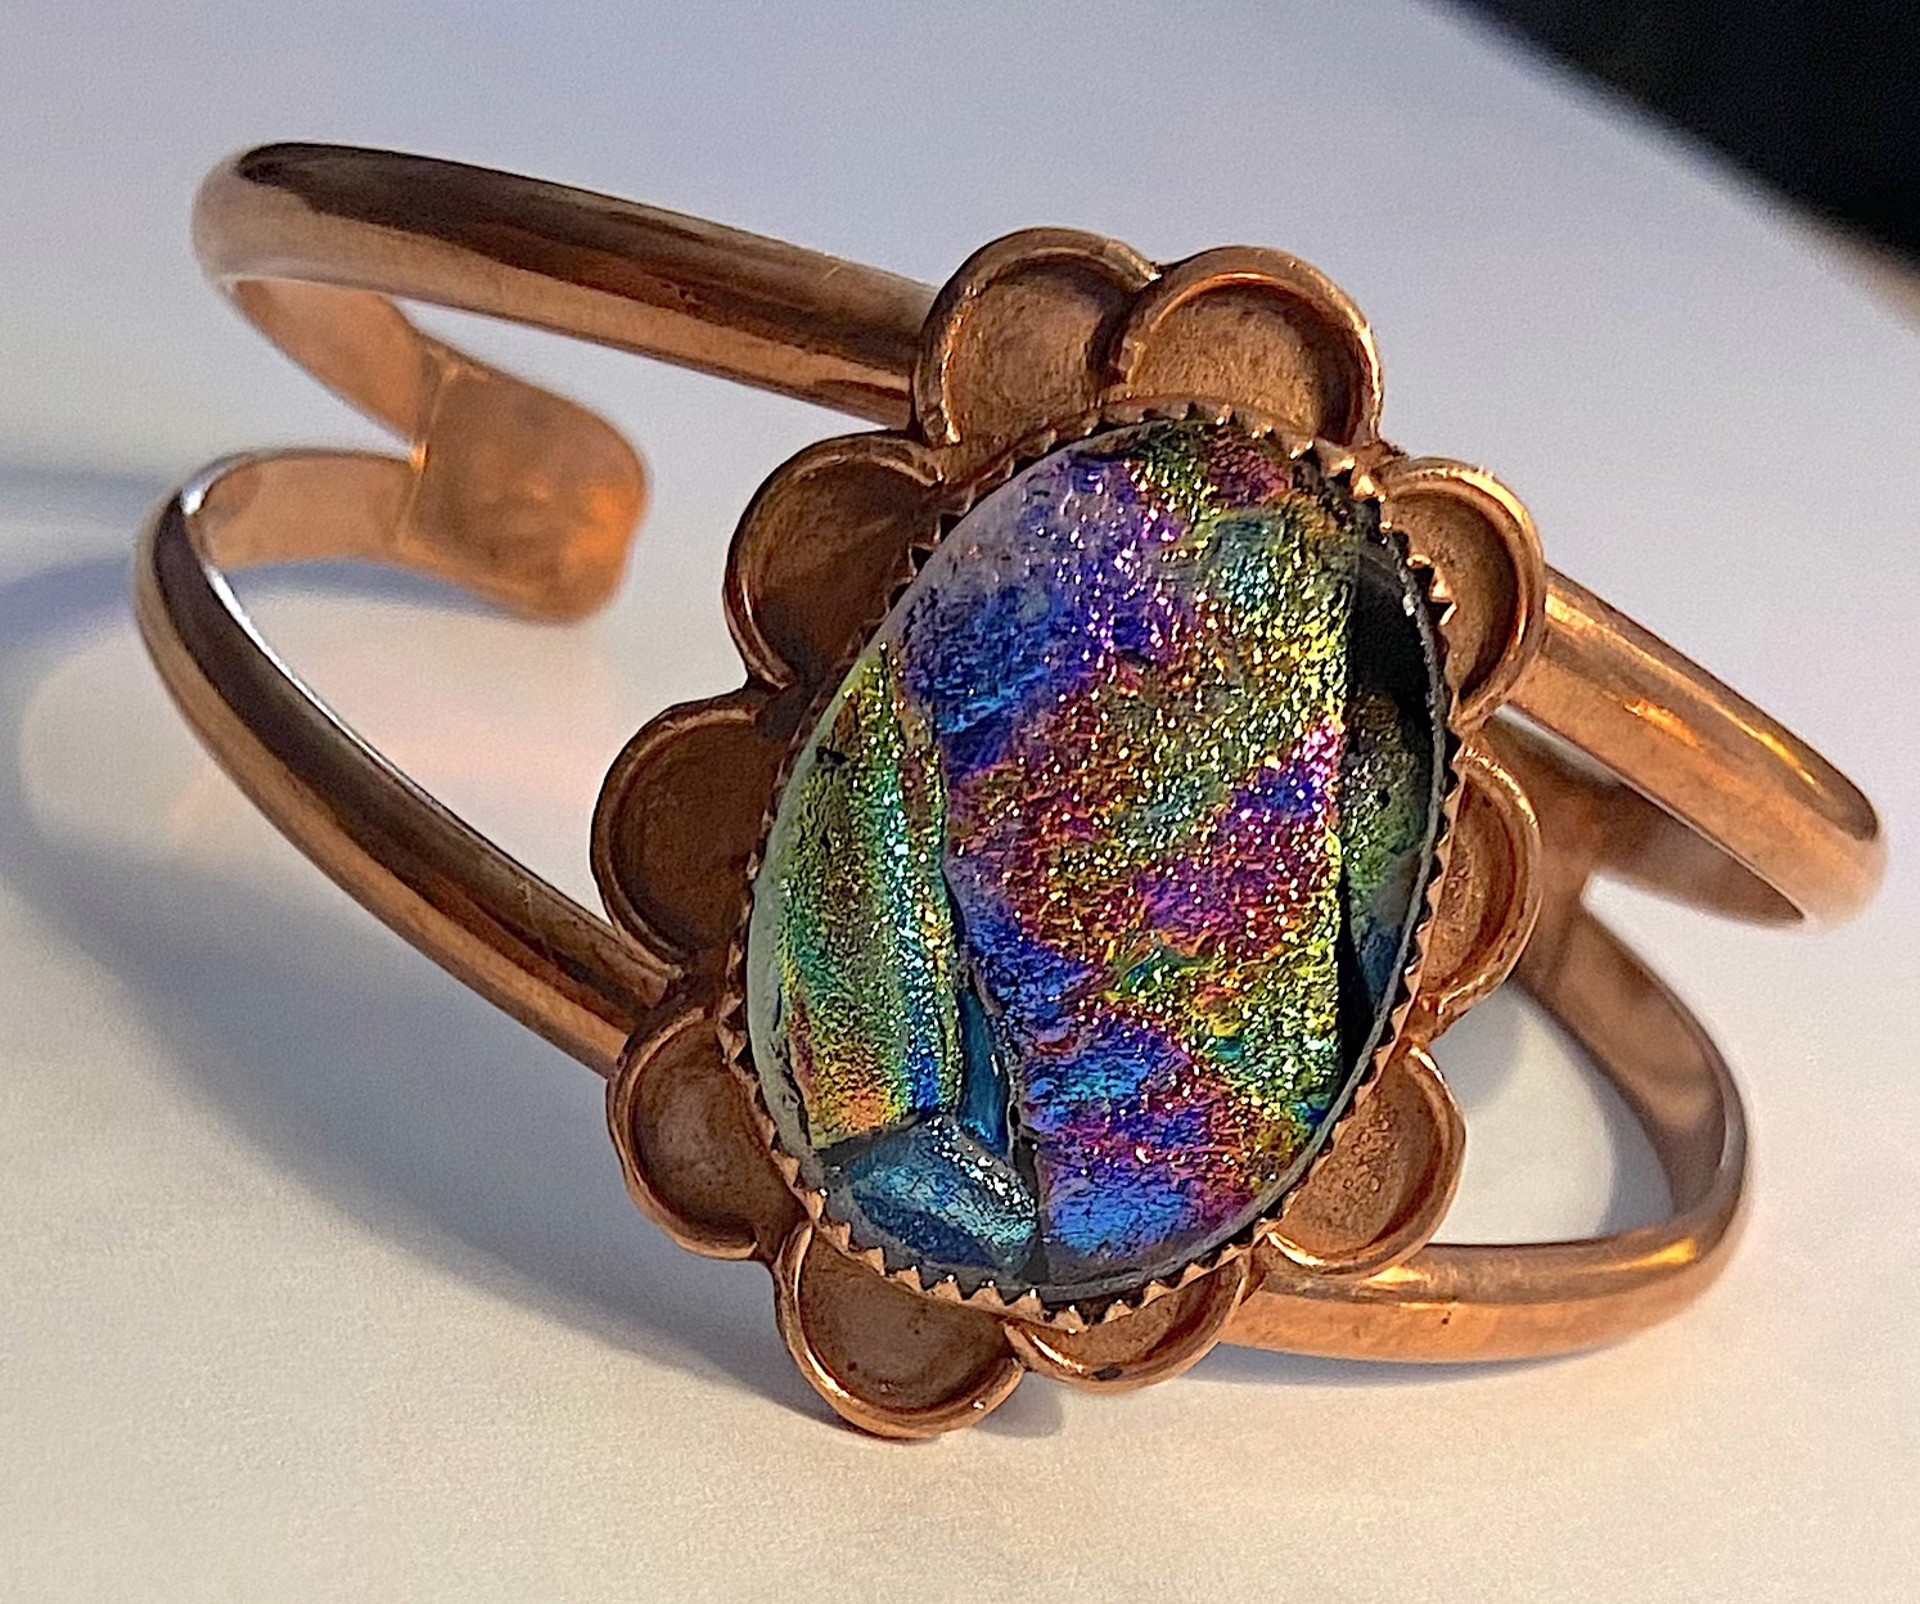 Copper Bracelet #3 by Jenna Plein